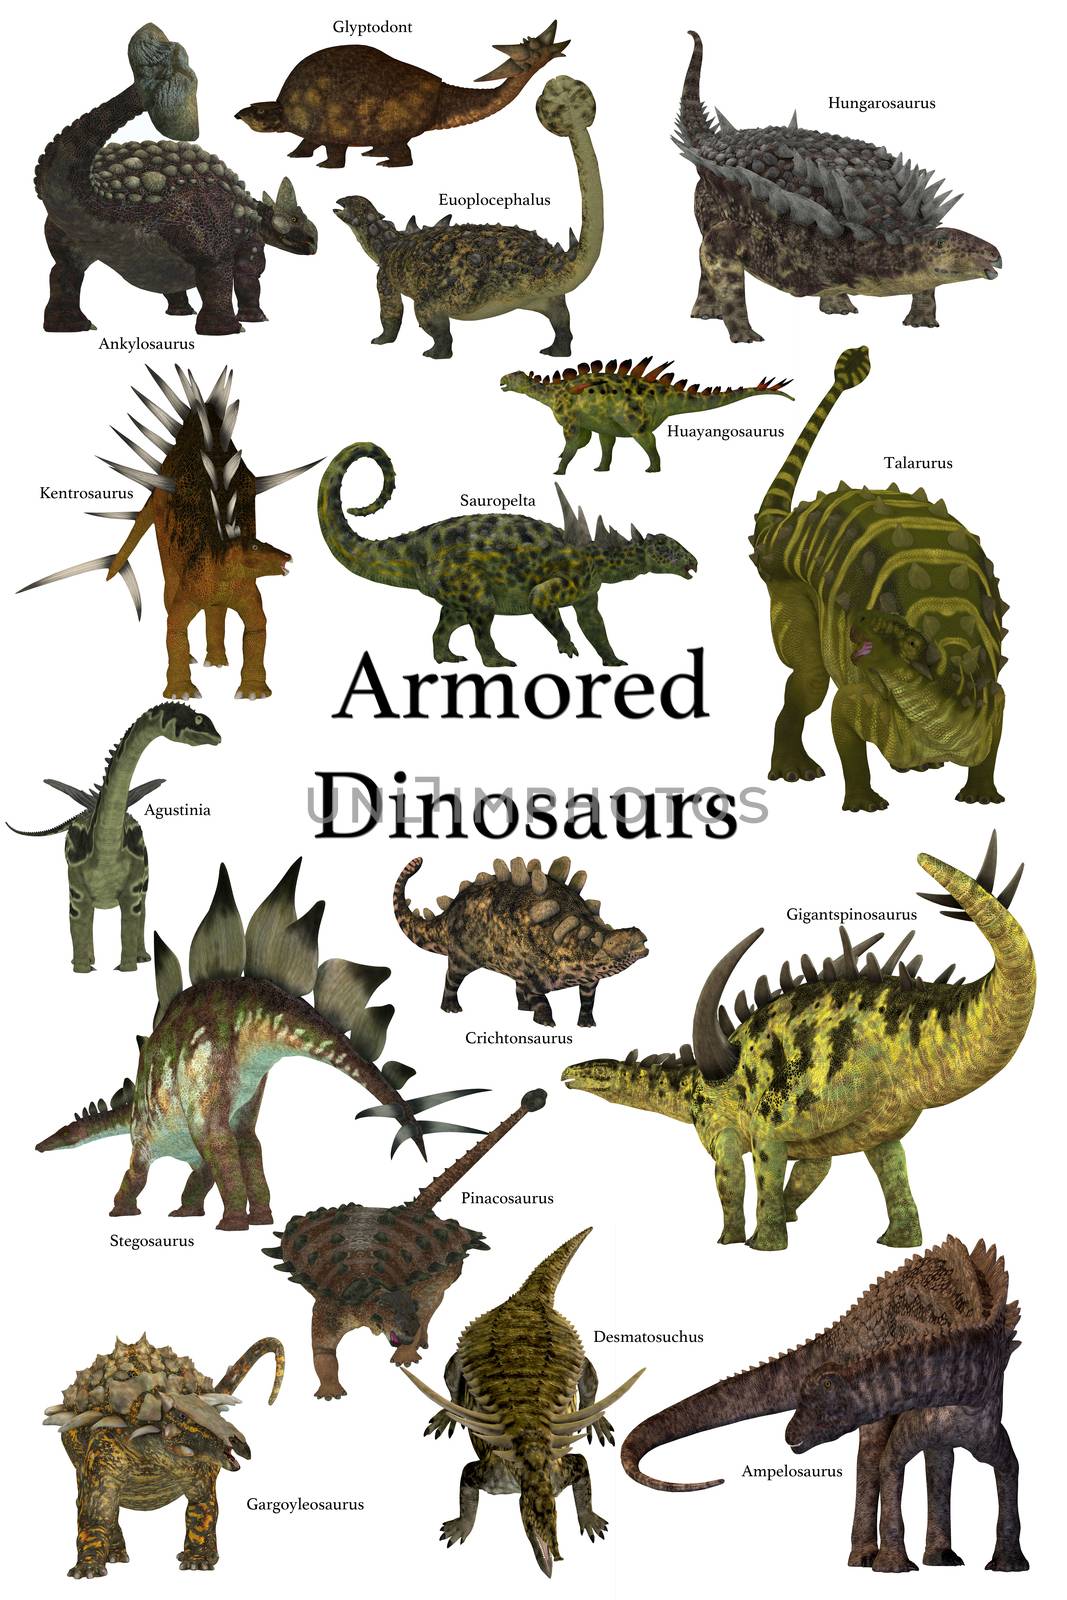 Armored Dinosaurs by Catmando